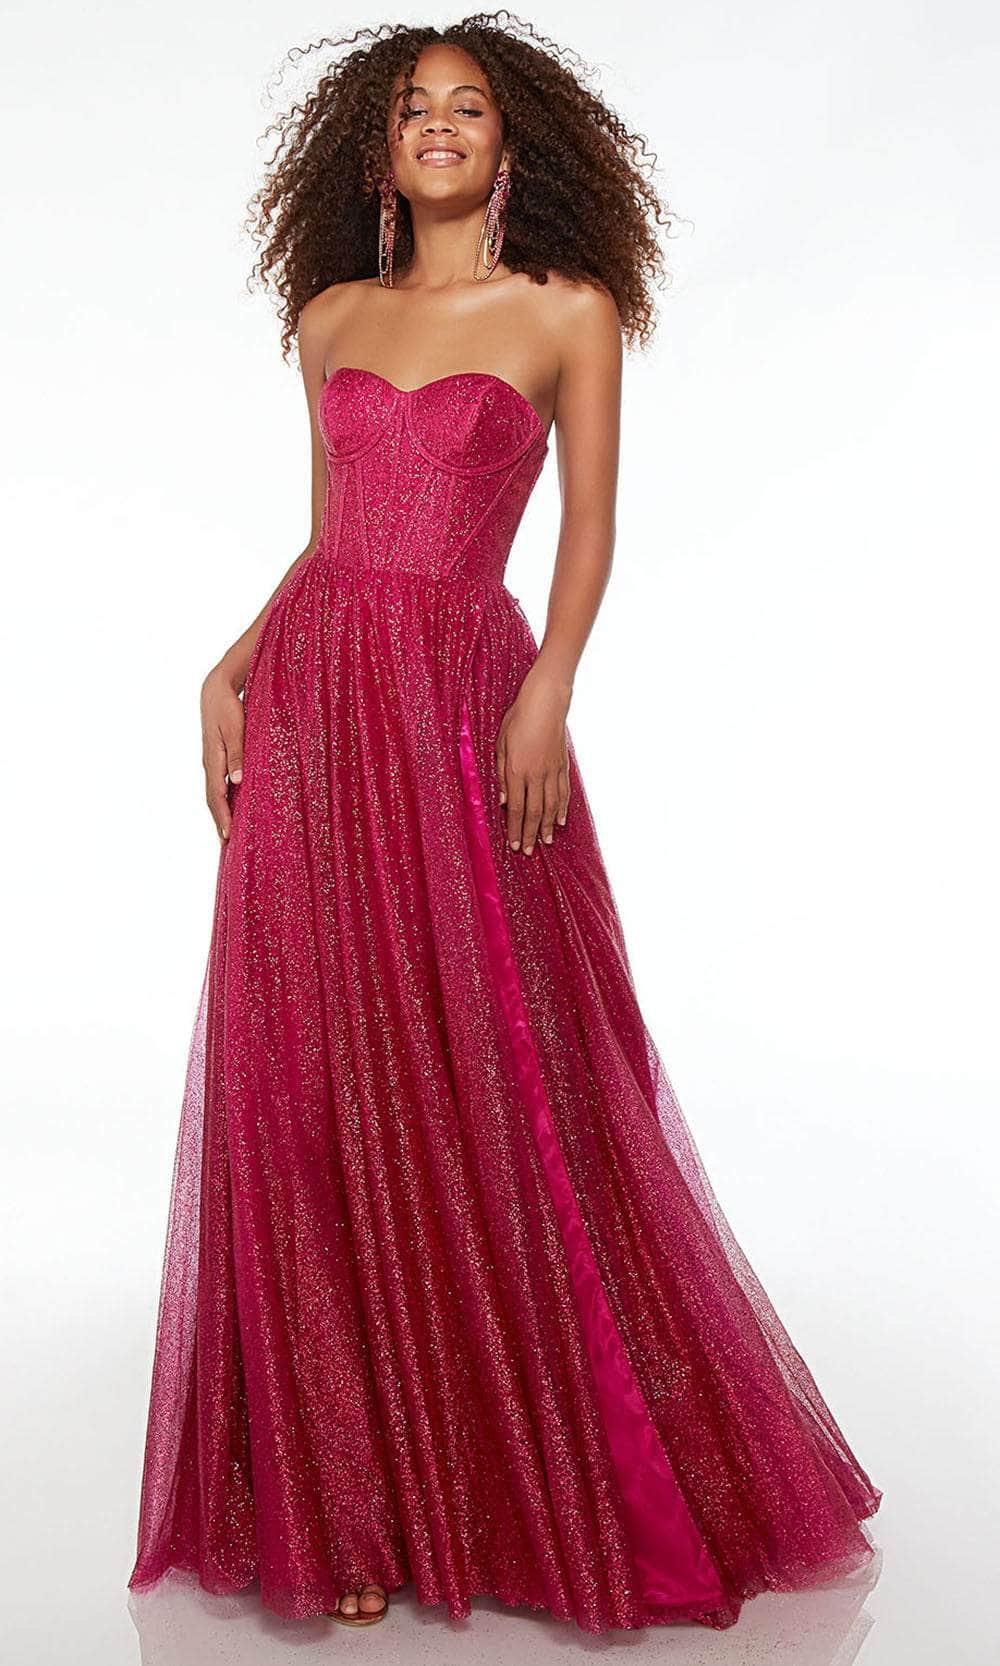 Alyce Paris 61601 - Corset Glitter Prom Dress with Slit
